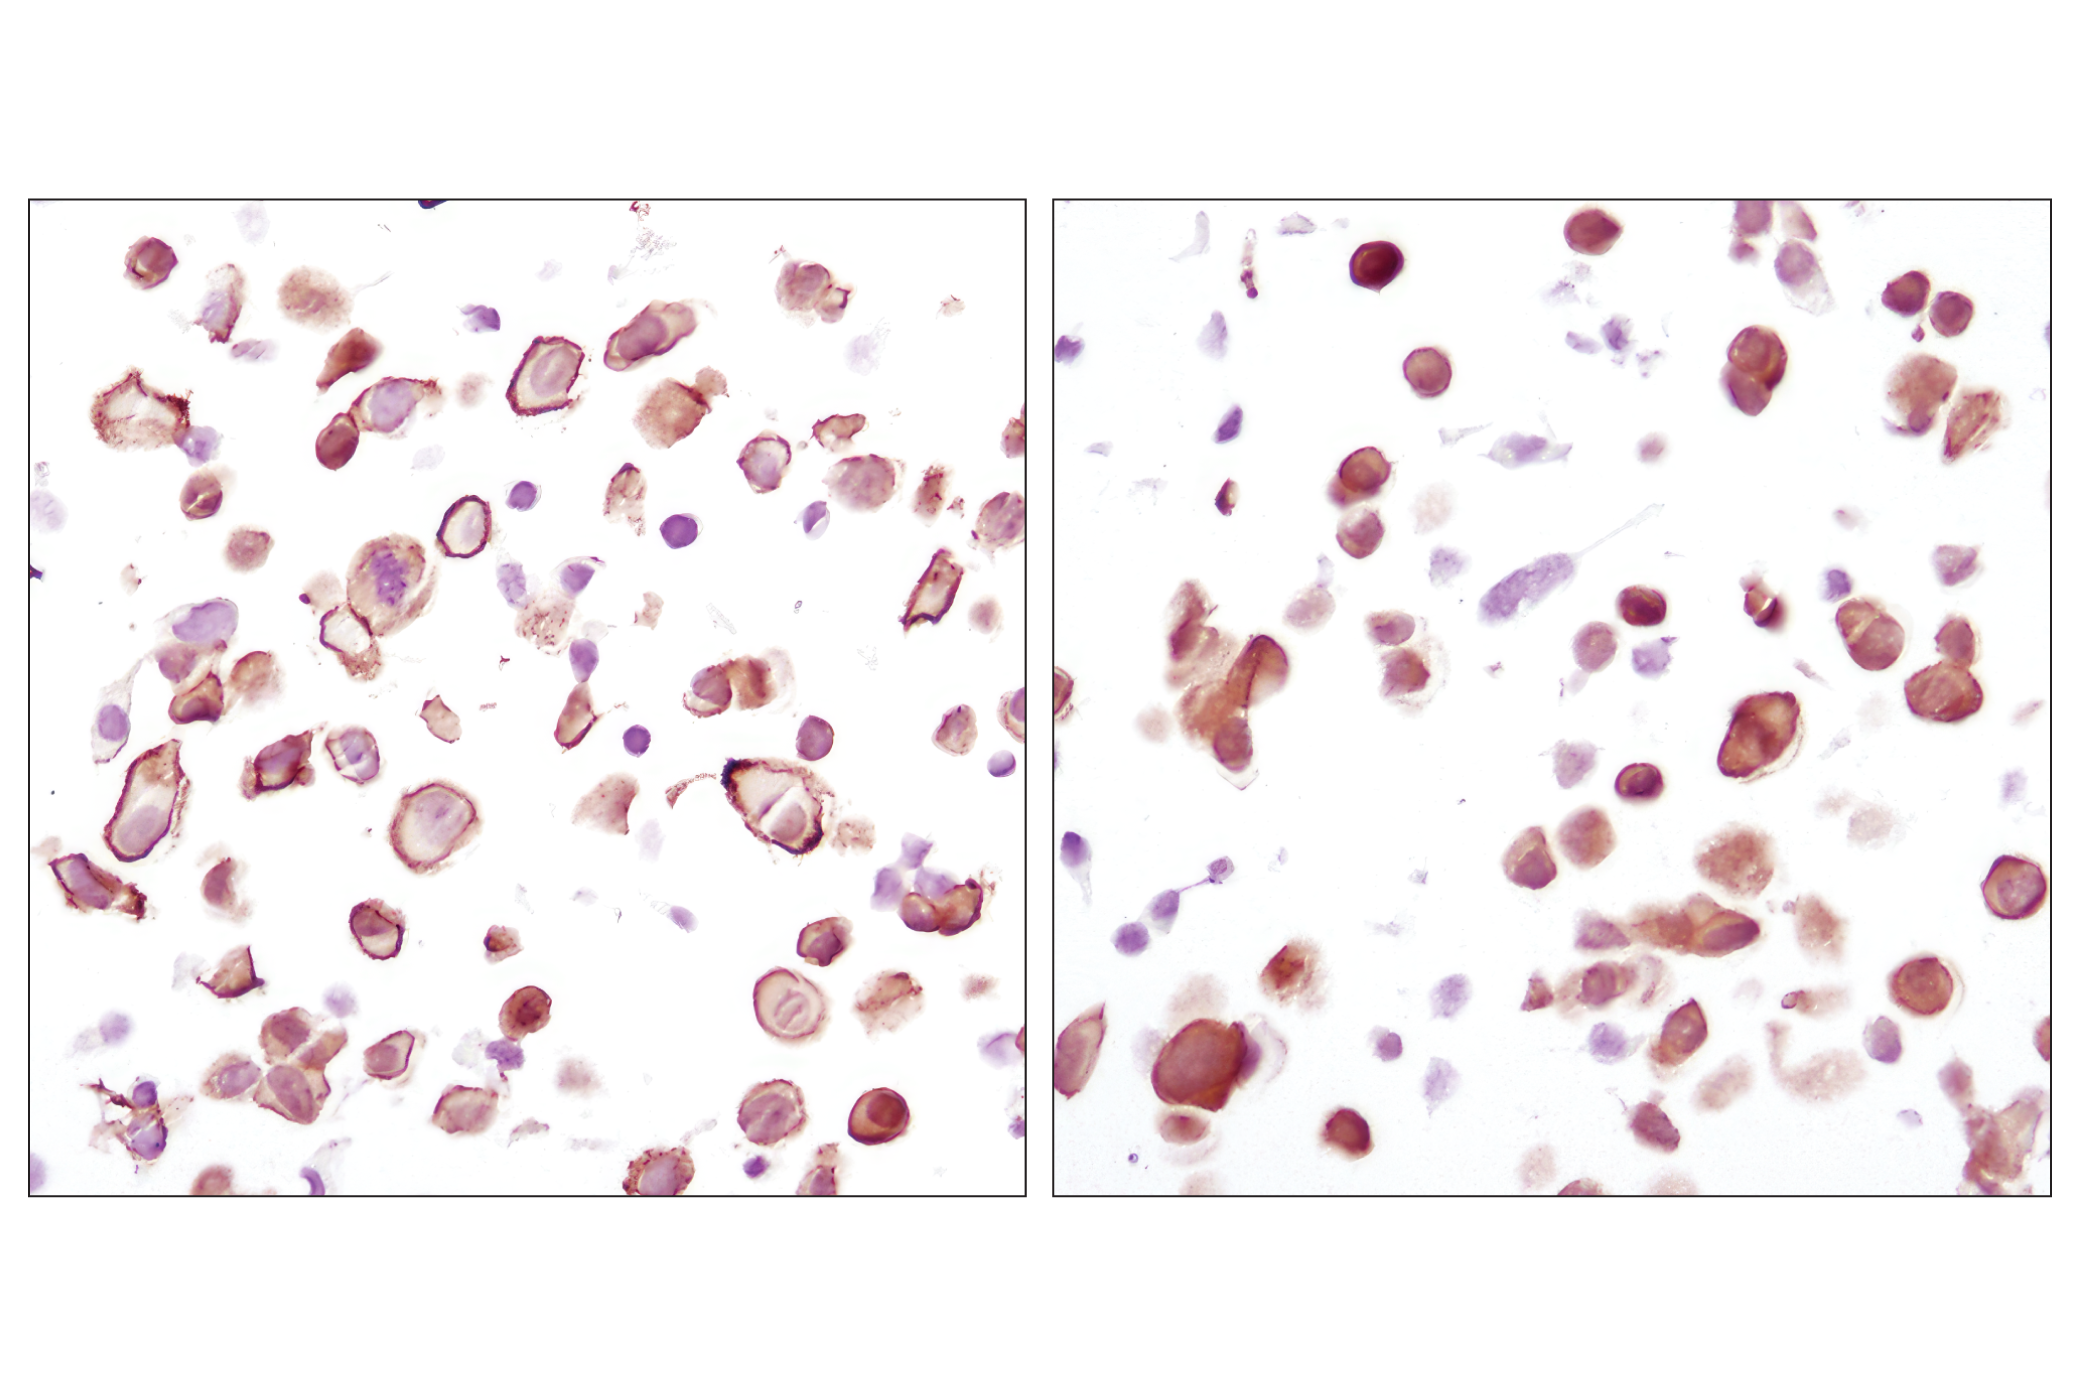  Image 14: PhosphoPlus® Akt (Ser473) Antibody Kit